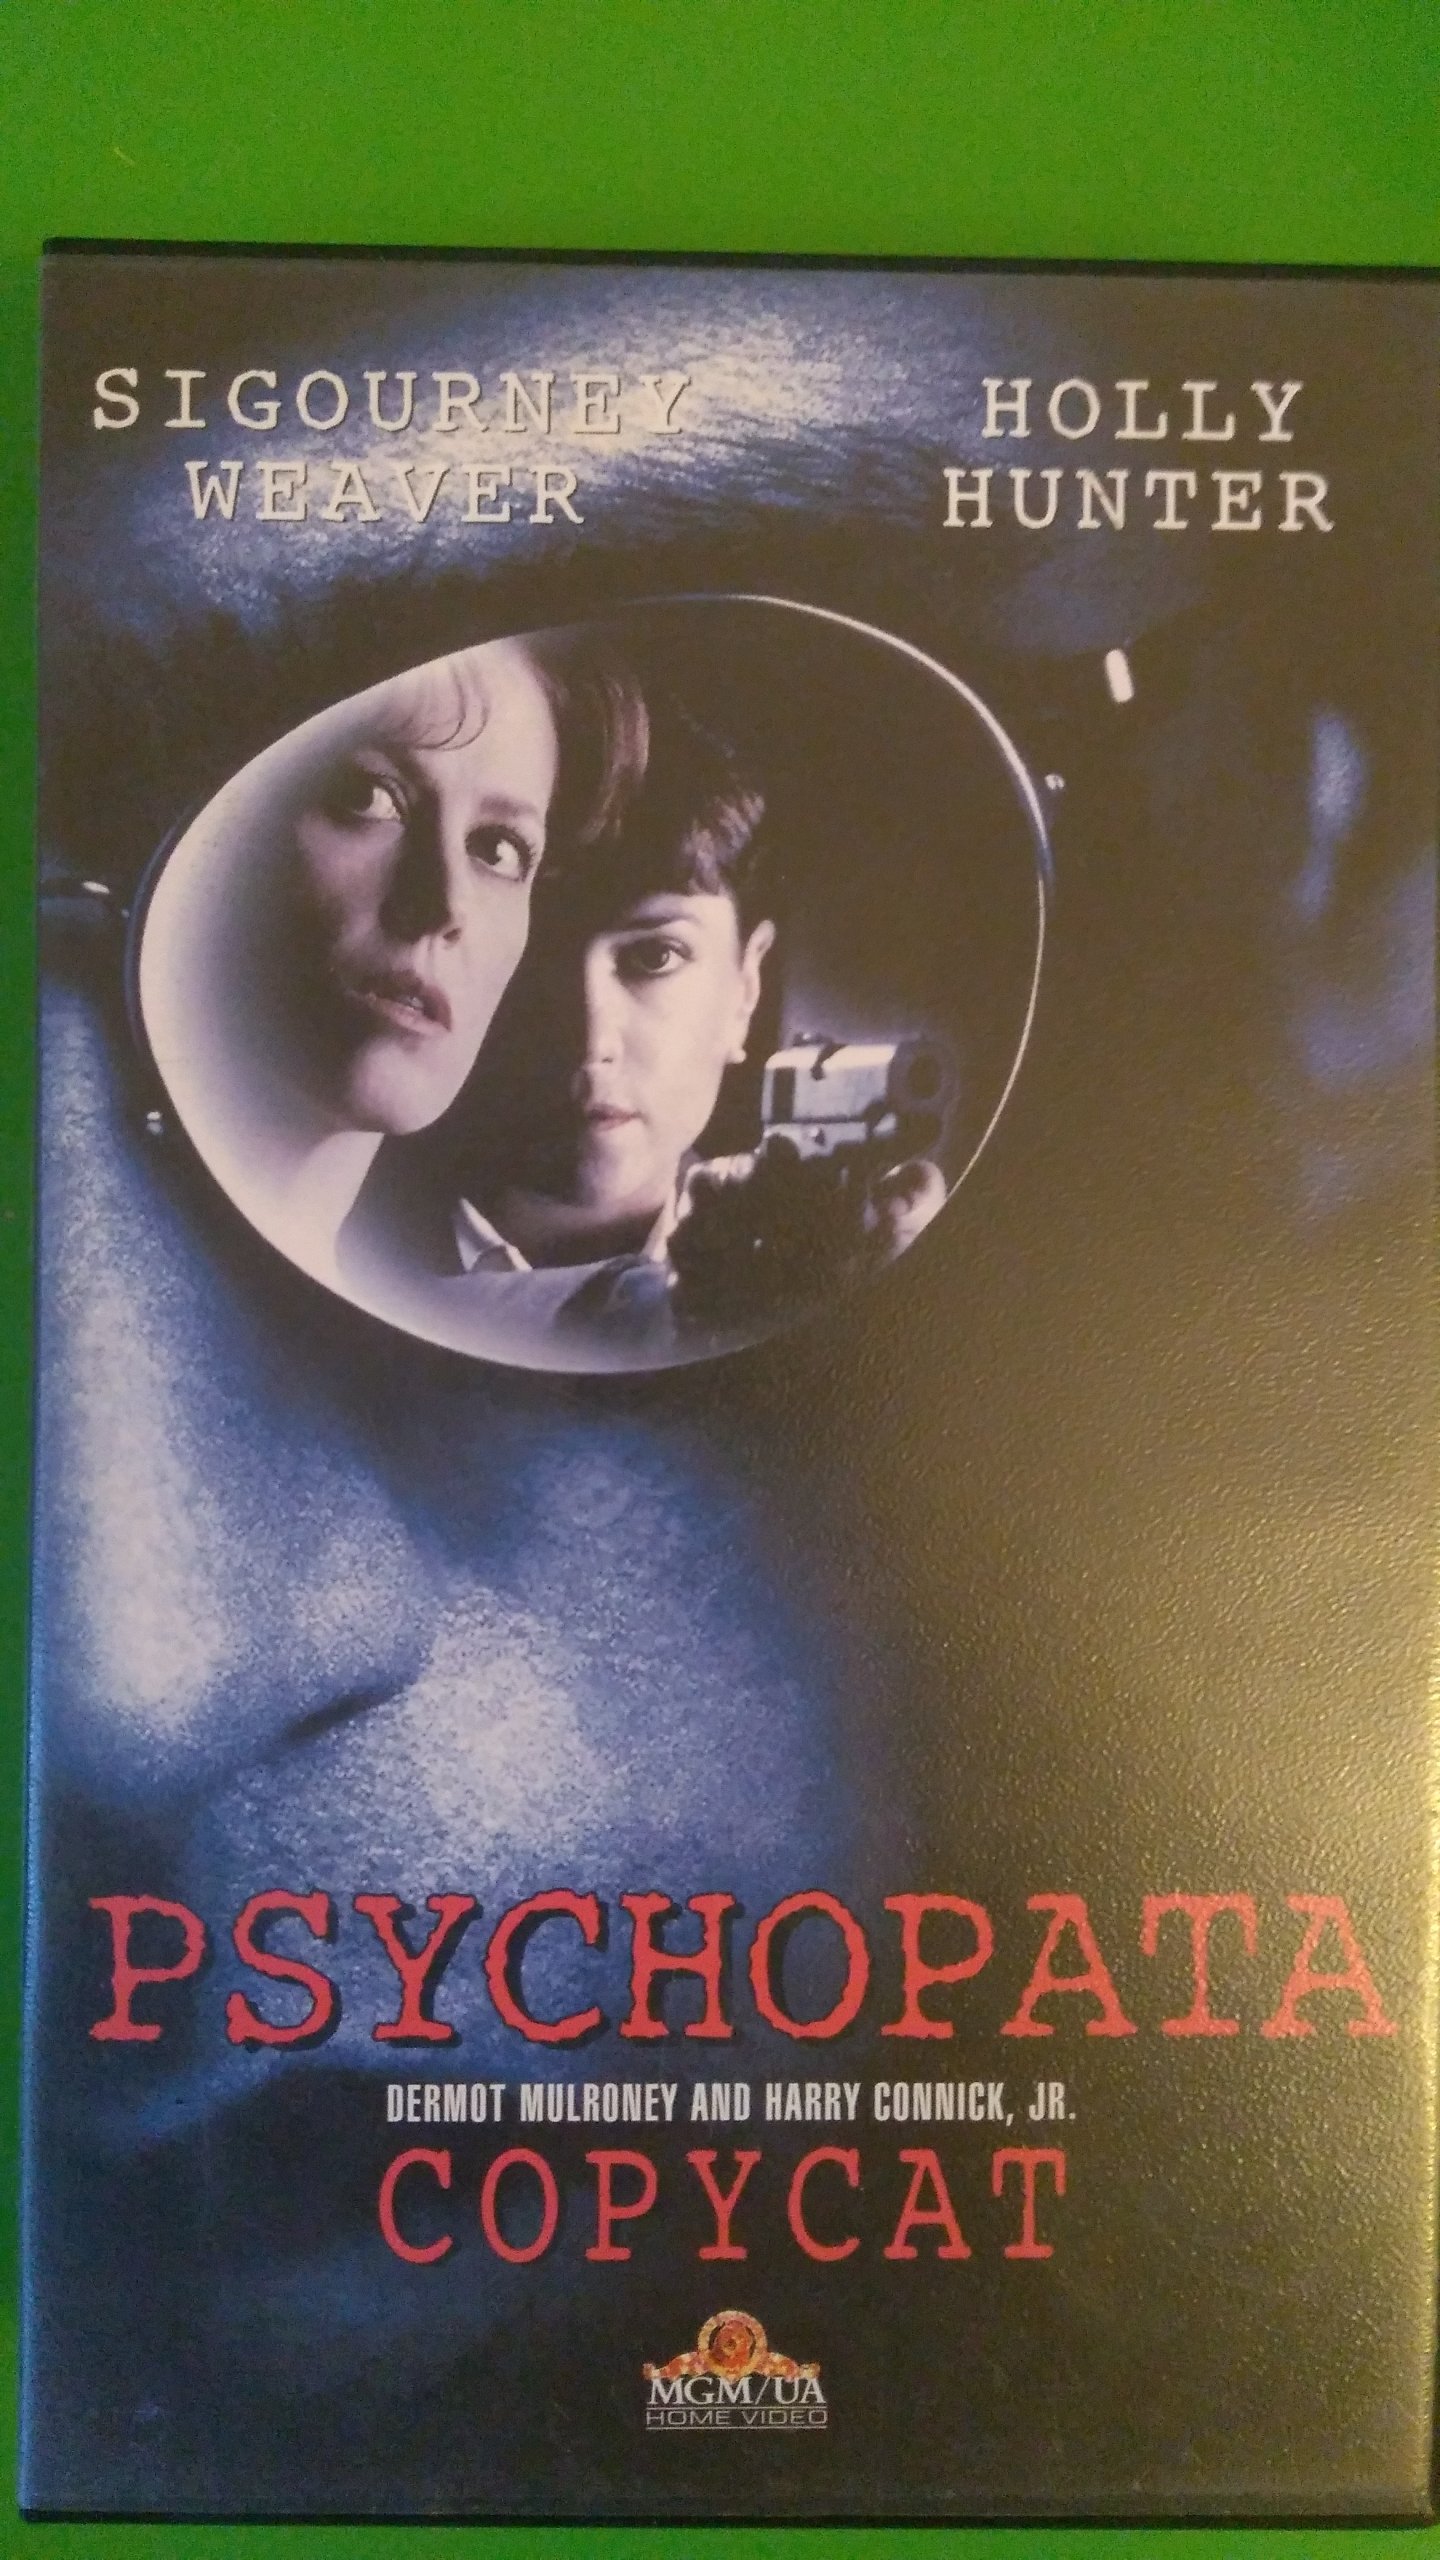 Psychopata (Copycat) VHS